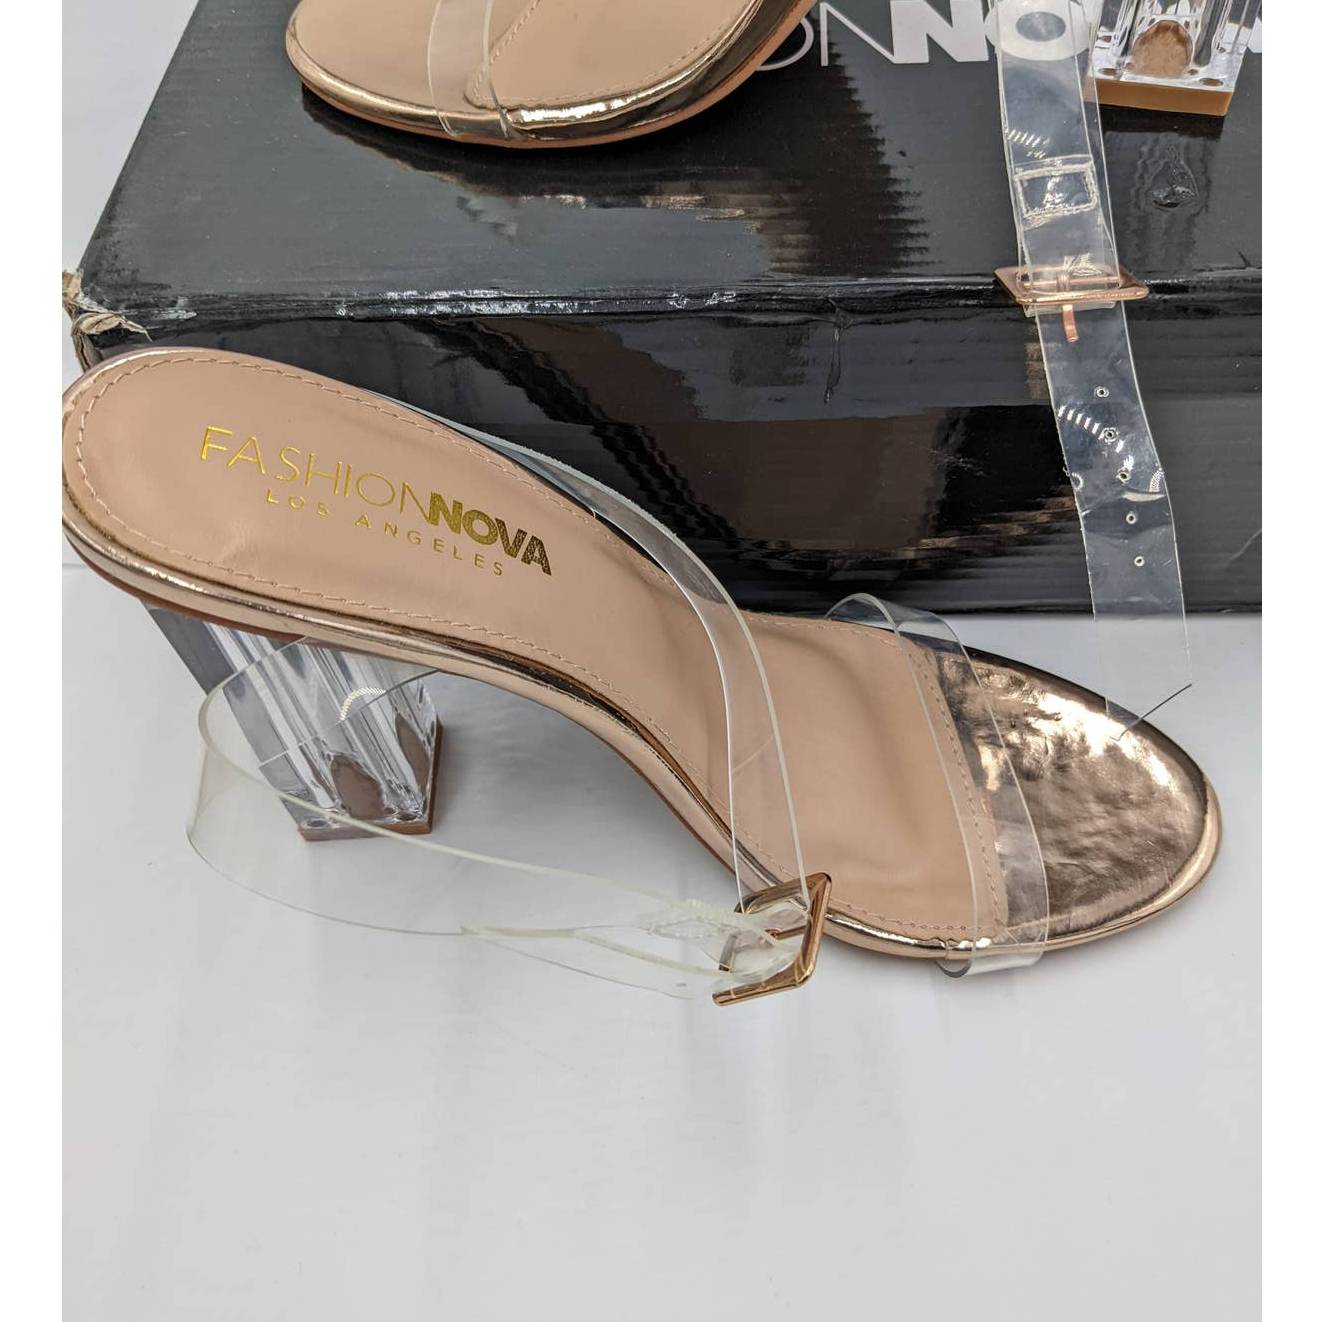 The Glass Slipper - Black  Heels, Fashion nova shoes, Womens